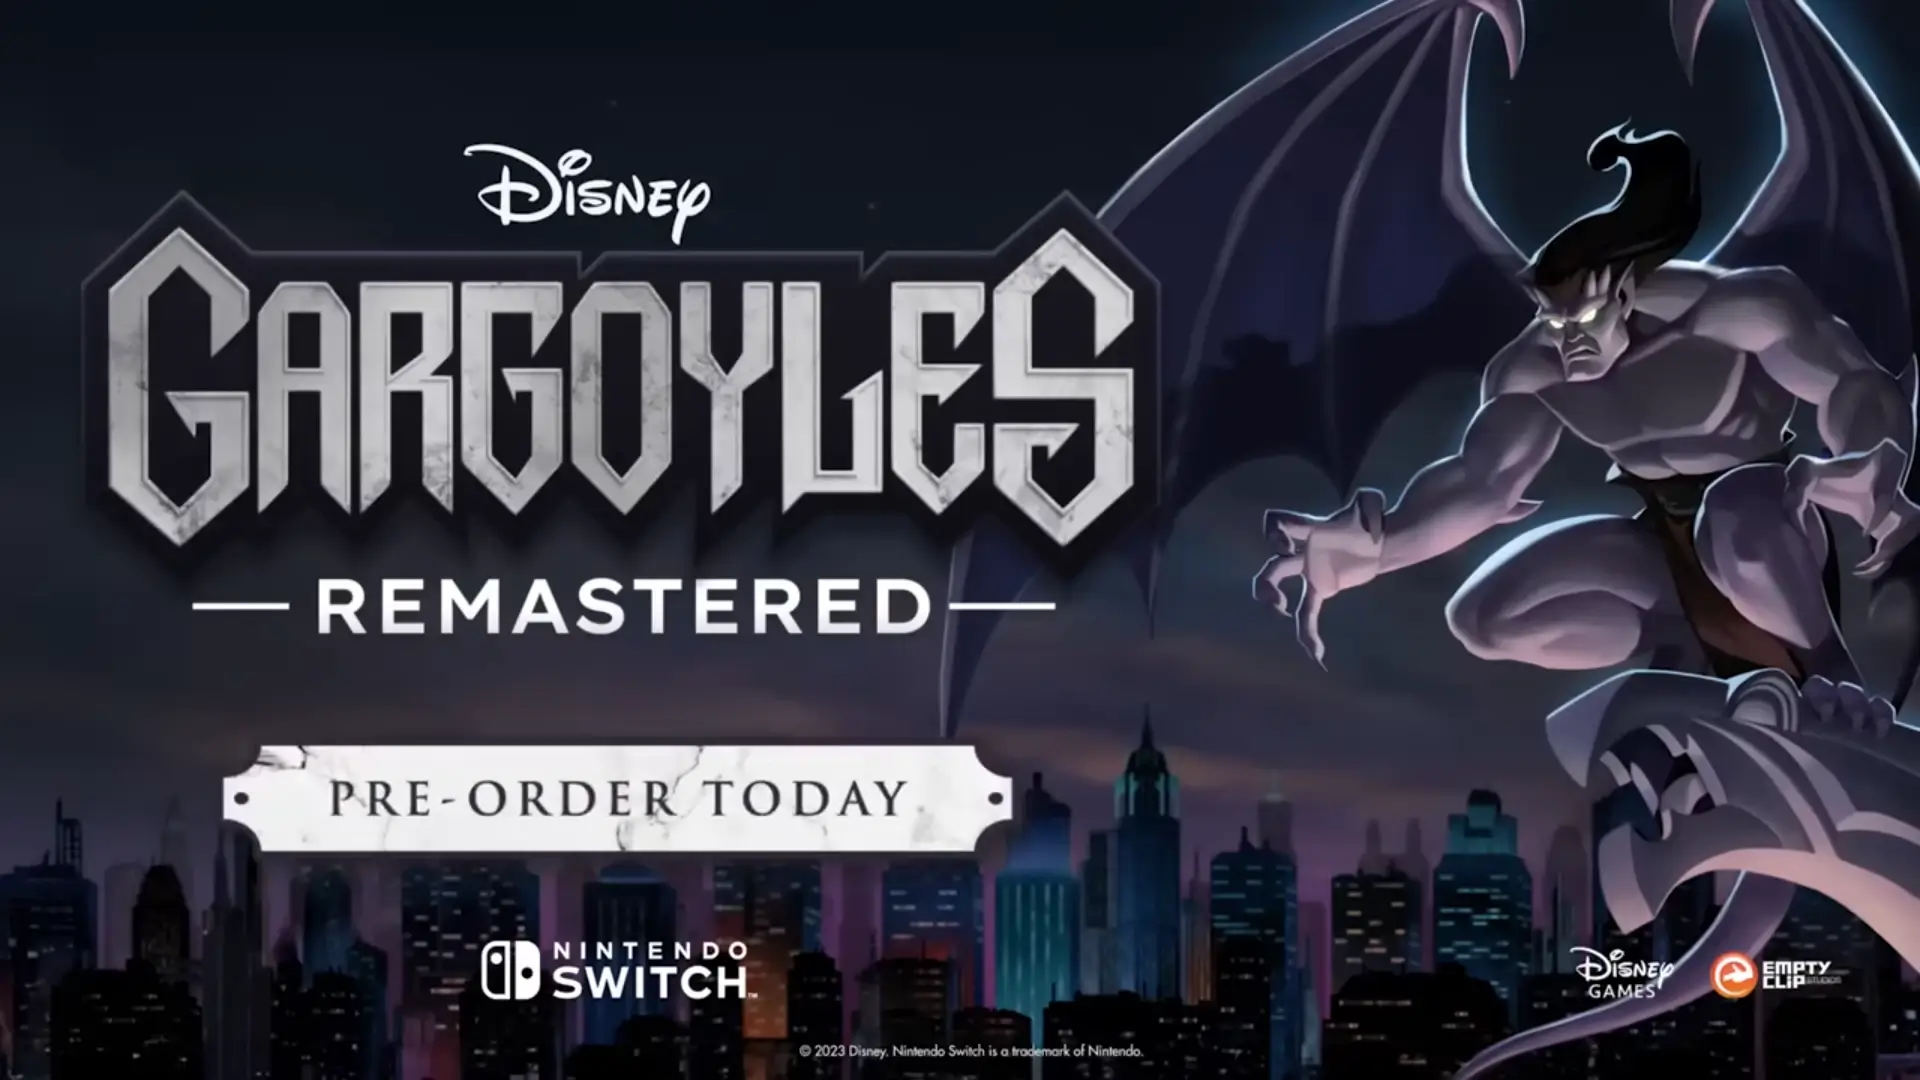 Disney Gargoyles Remastered Nintendo Switch Pre-Order Trailer 1 1080p